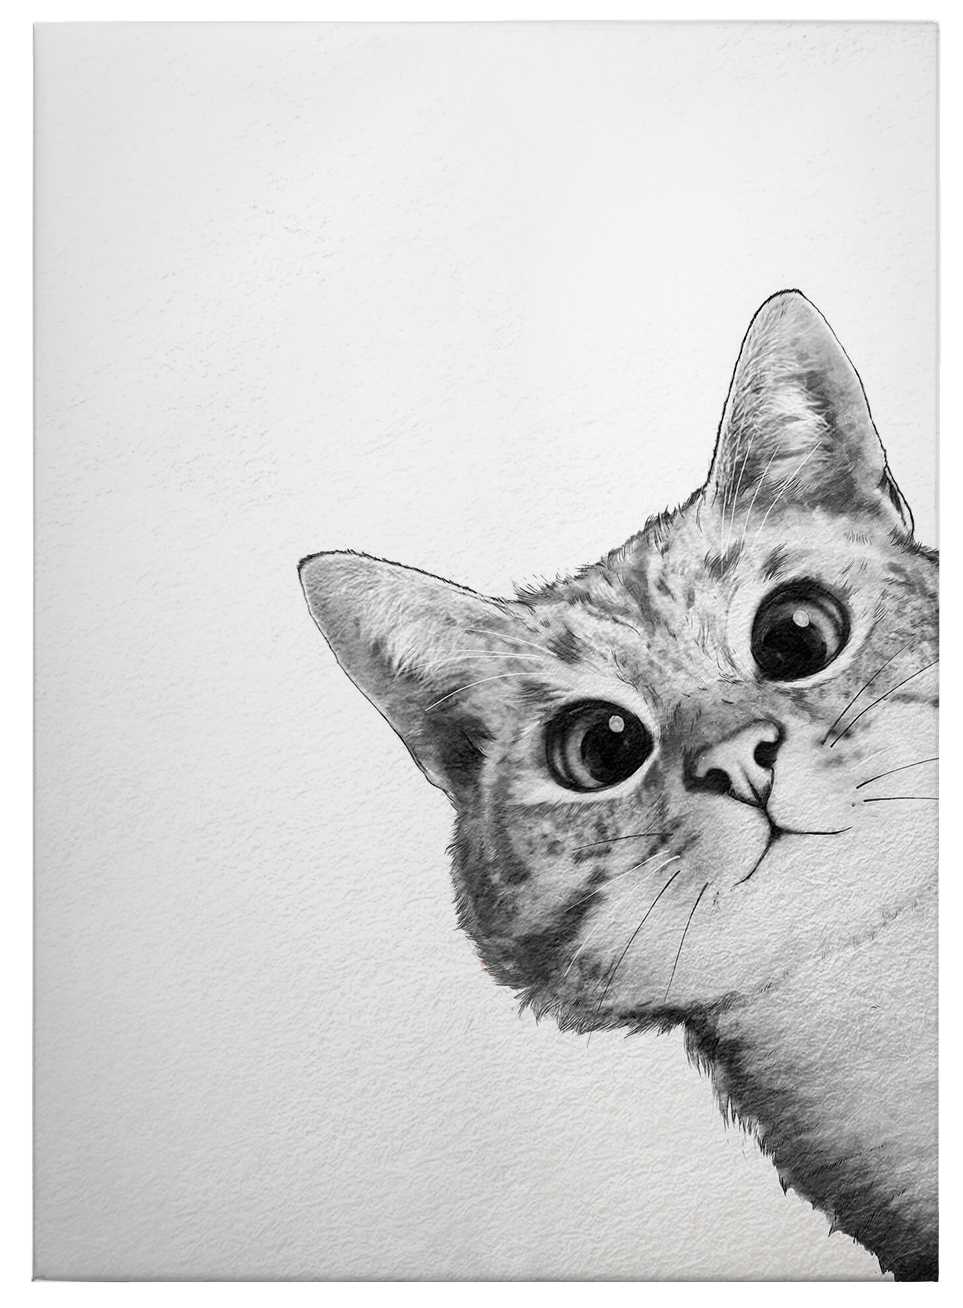             Cuadro en lienzo "Sneaky Cat" de Graves, gato en blanco y negro - 0,50 m x 0,70 m
        